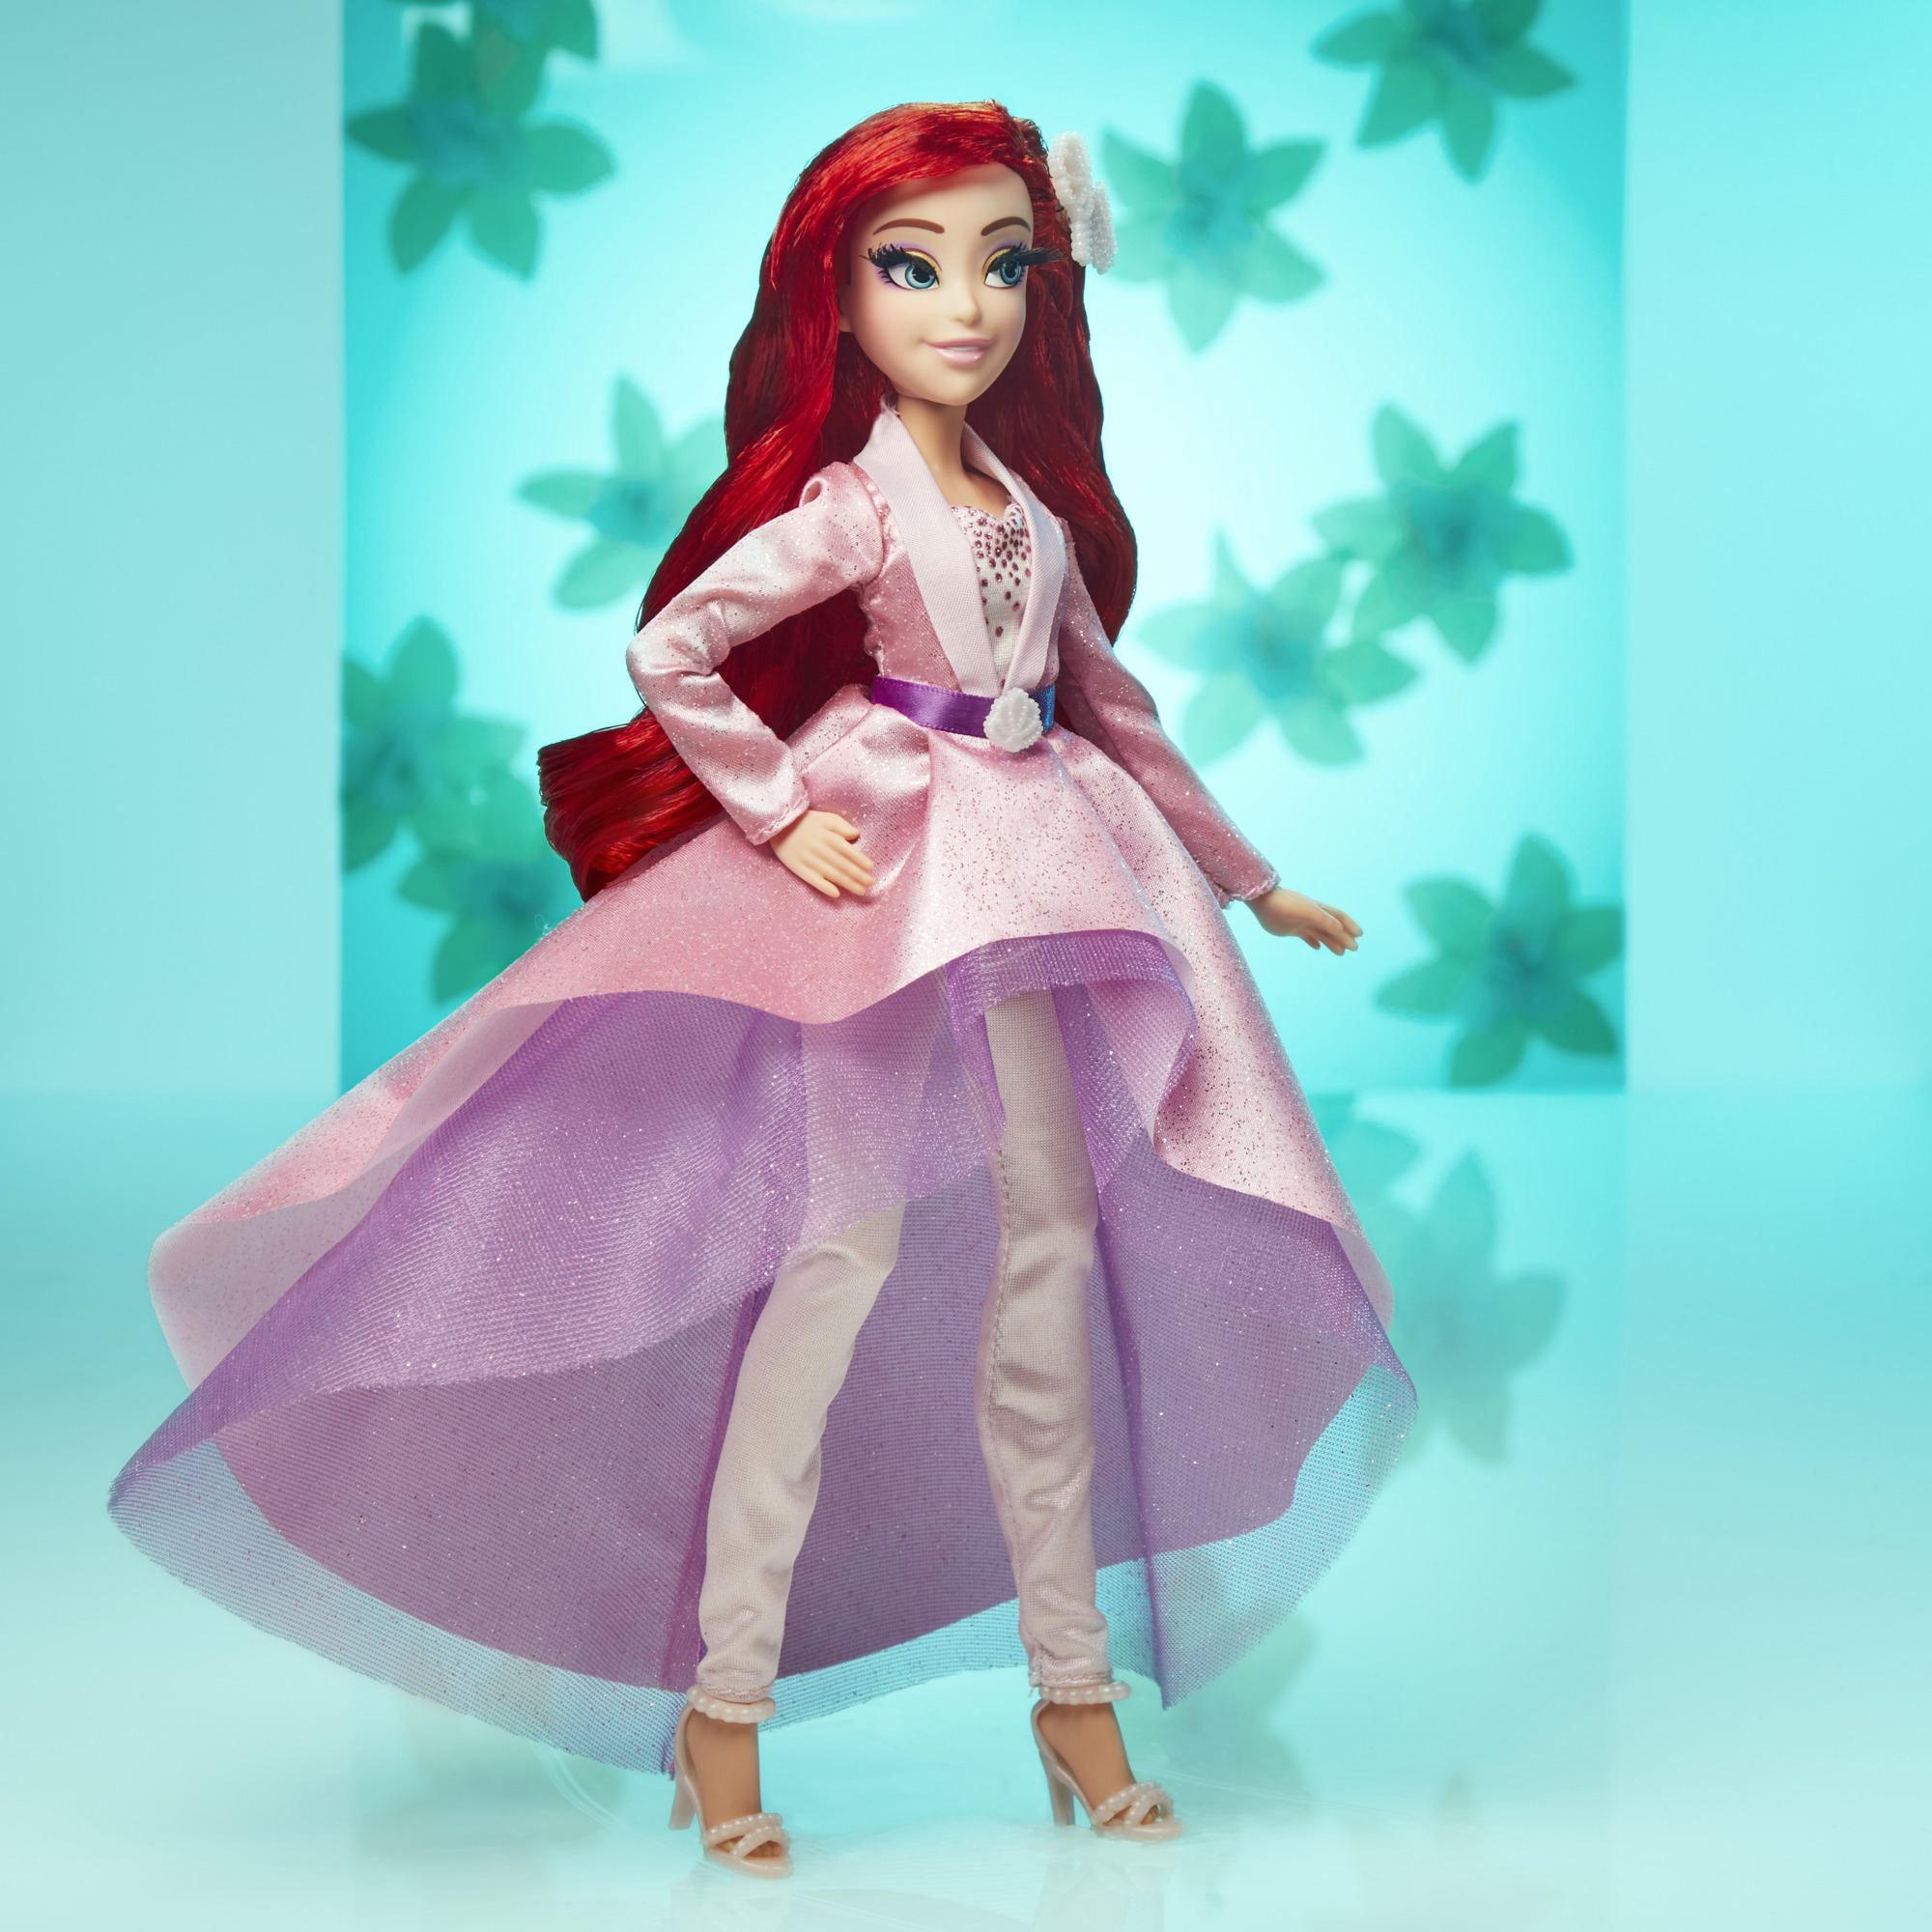 Disney Princess Style Series 07 Ariel, Fashion Doll in